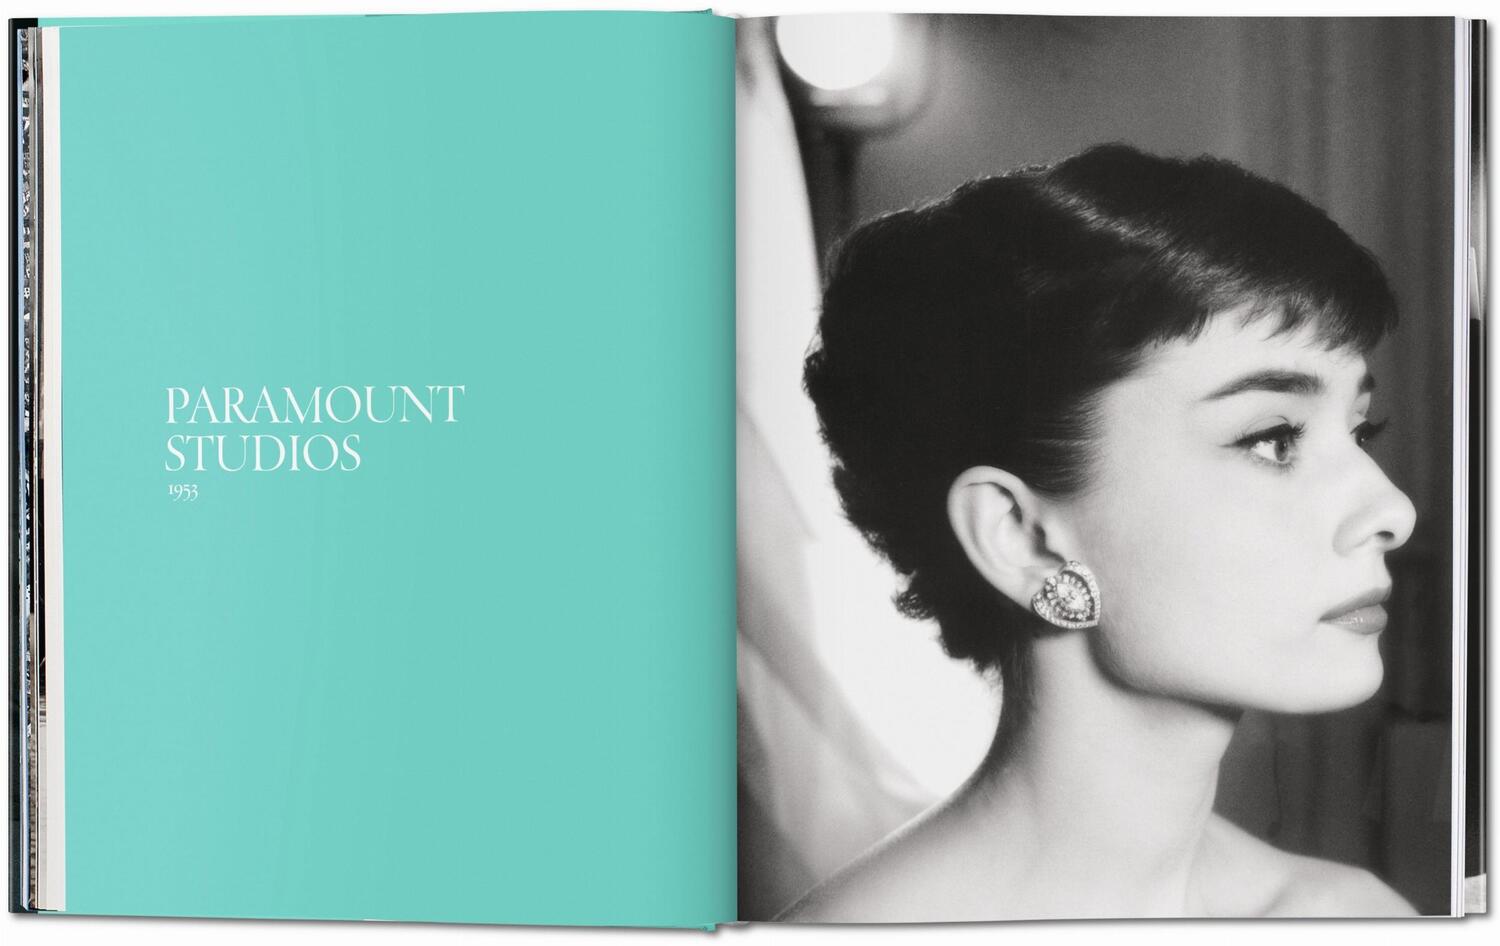 Bild: 9783836554497 | Bob Willoughby. Audrey Hepburn. Photographs 1953-1966 | Buch | 280 S.